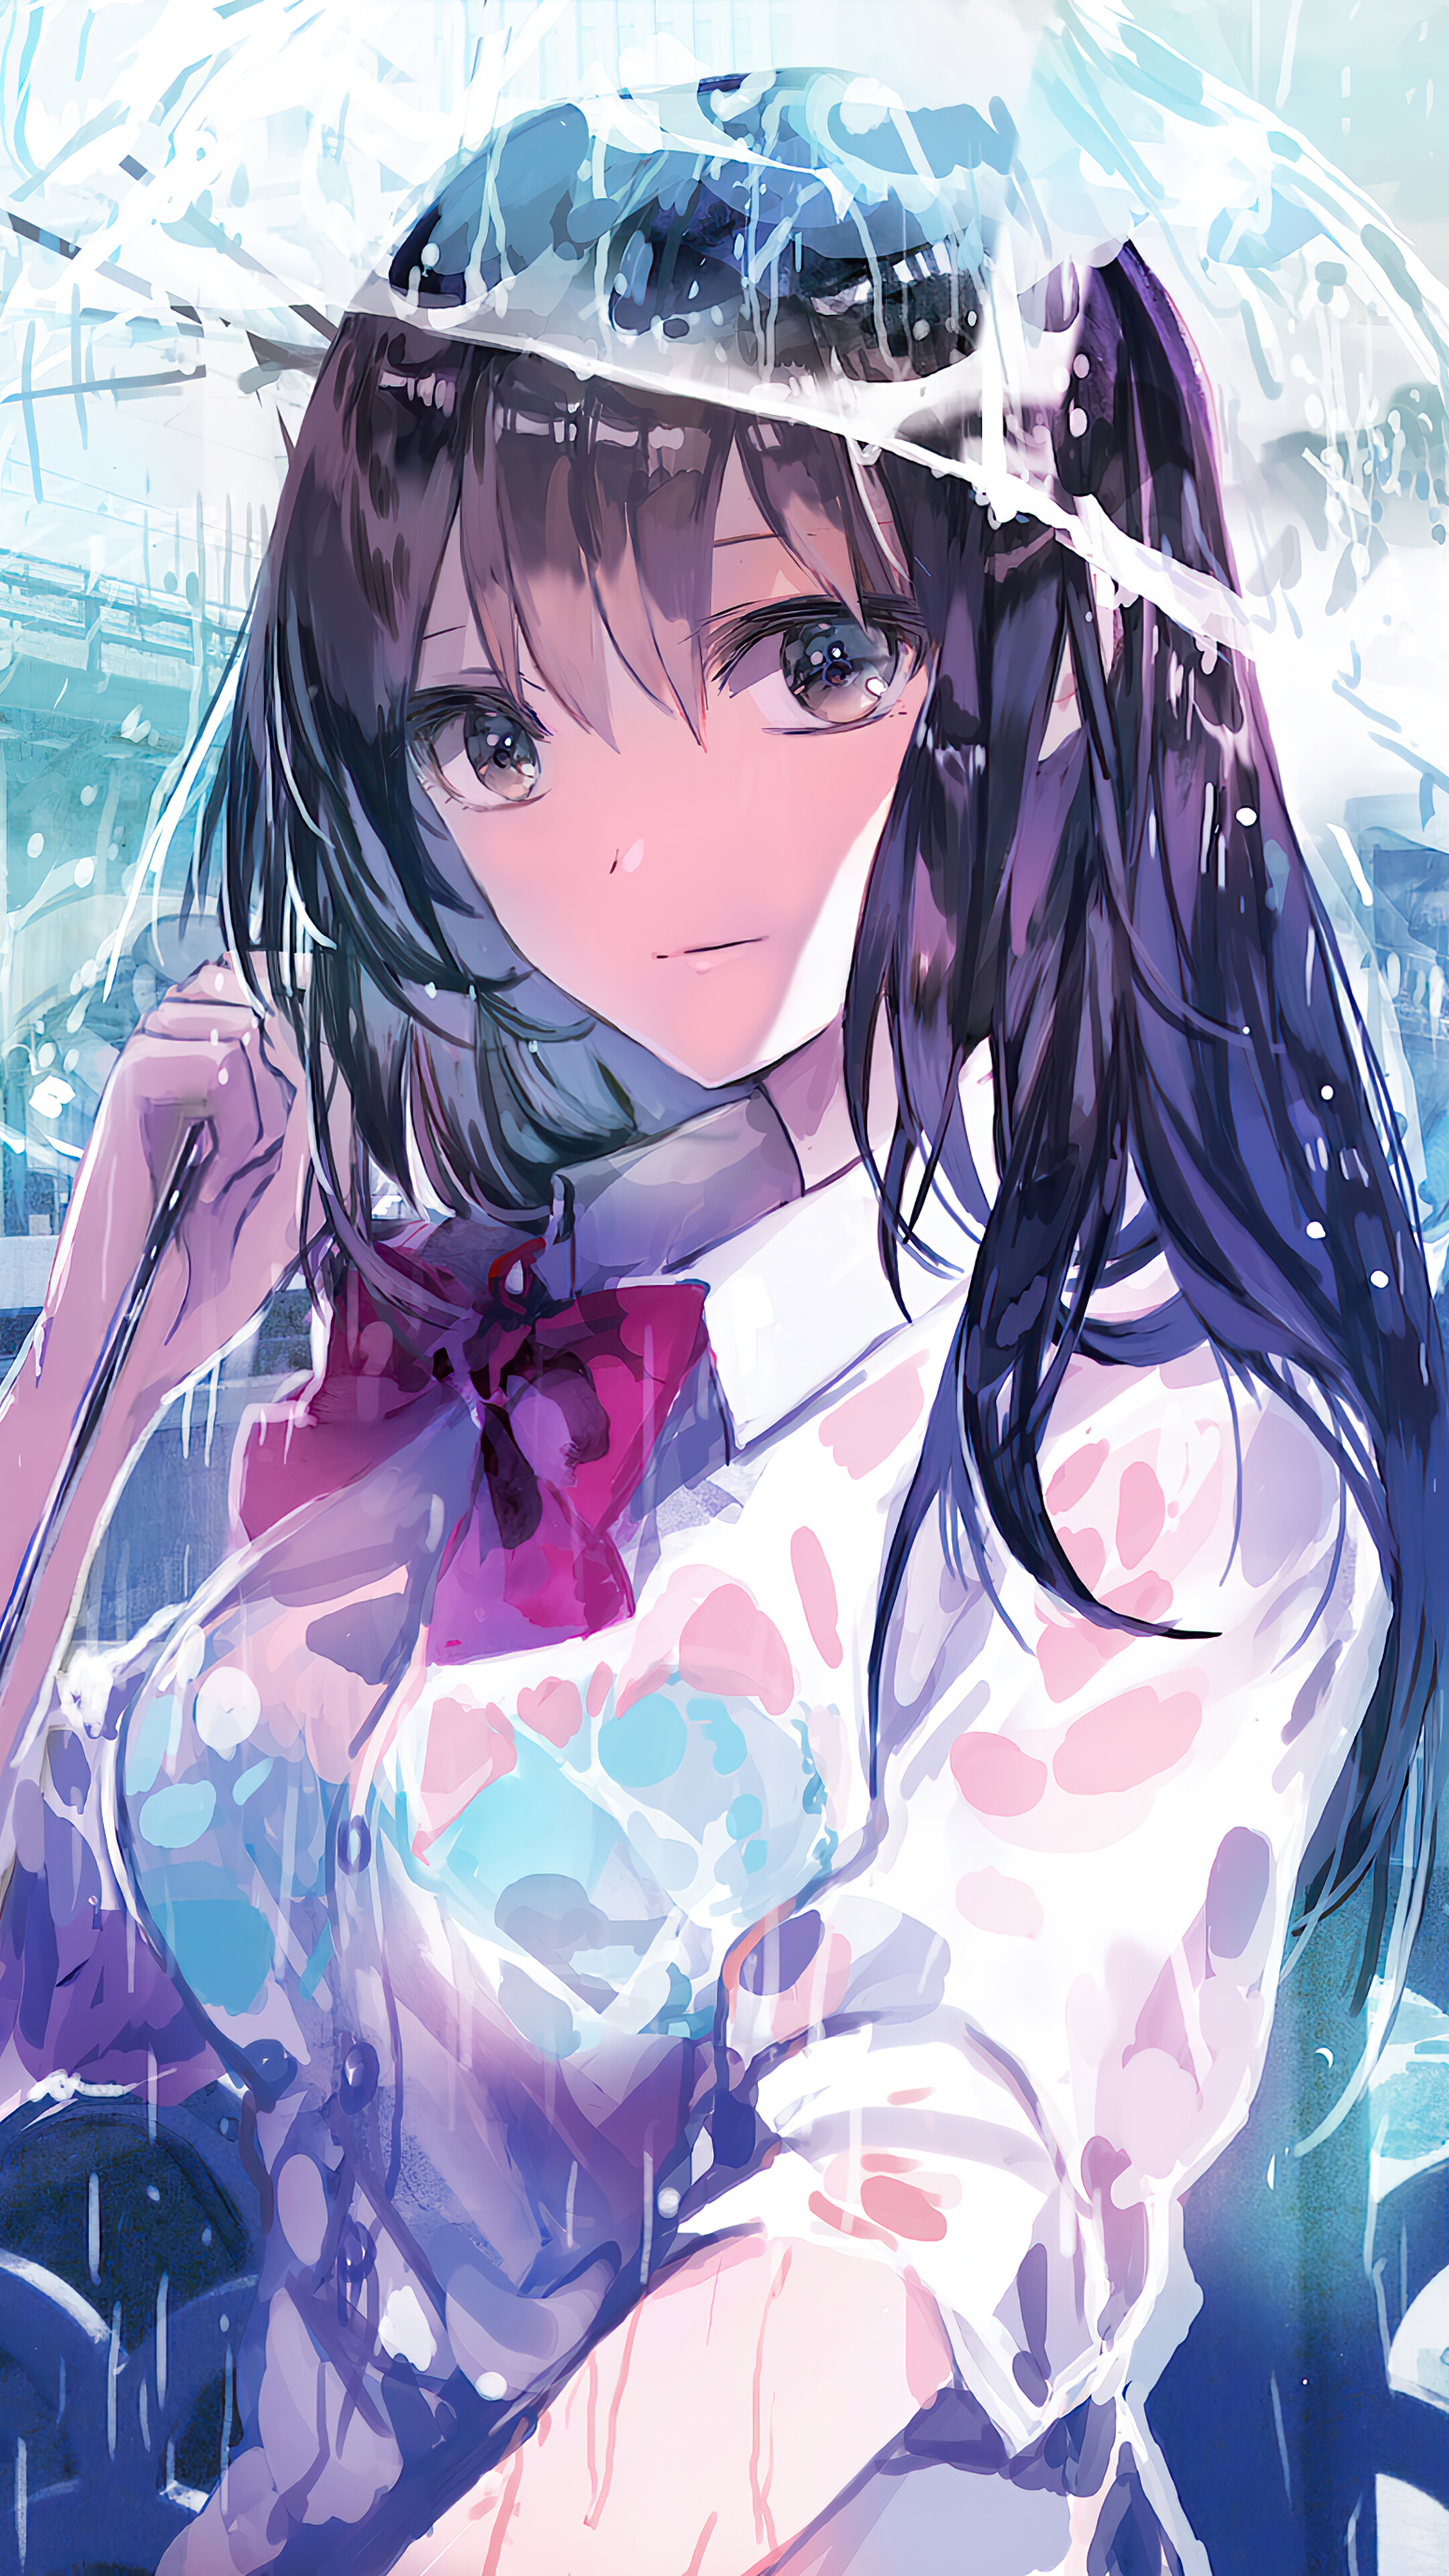 Anime, Girl, Umbrella, Raining, 4K phone HD Wallpaper, Image, Background, Photo and Picture. Mocah HD Wallpaper